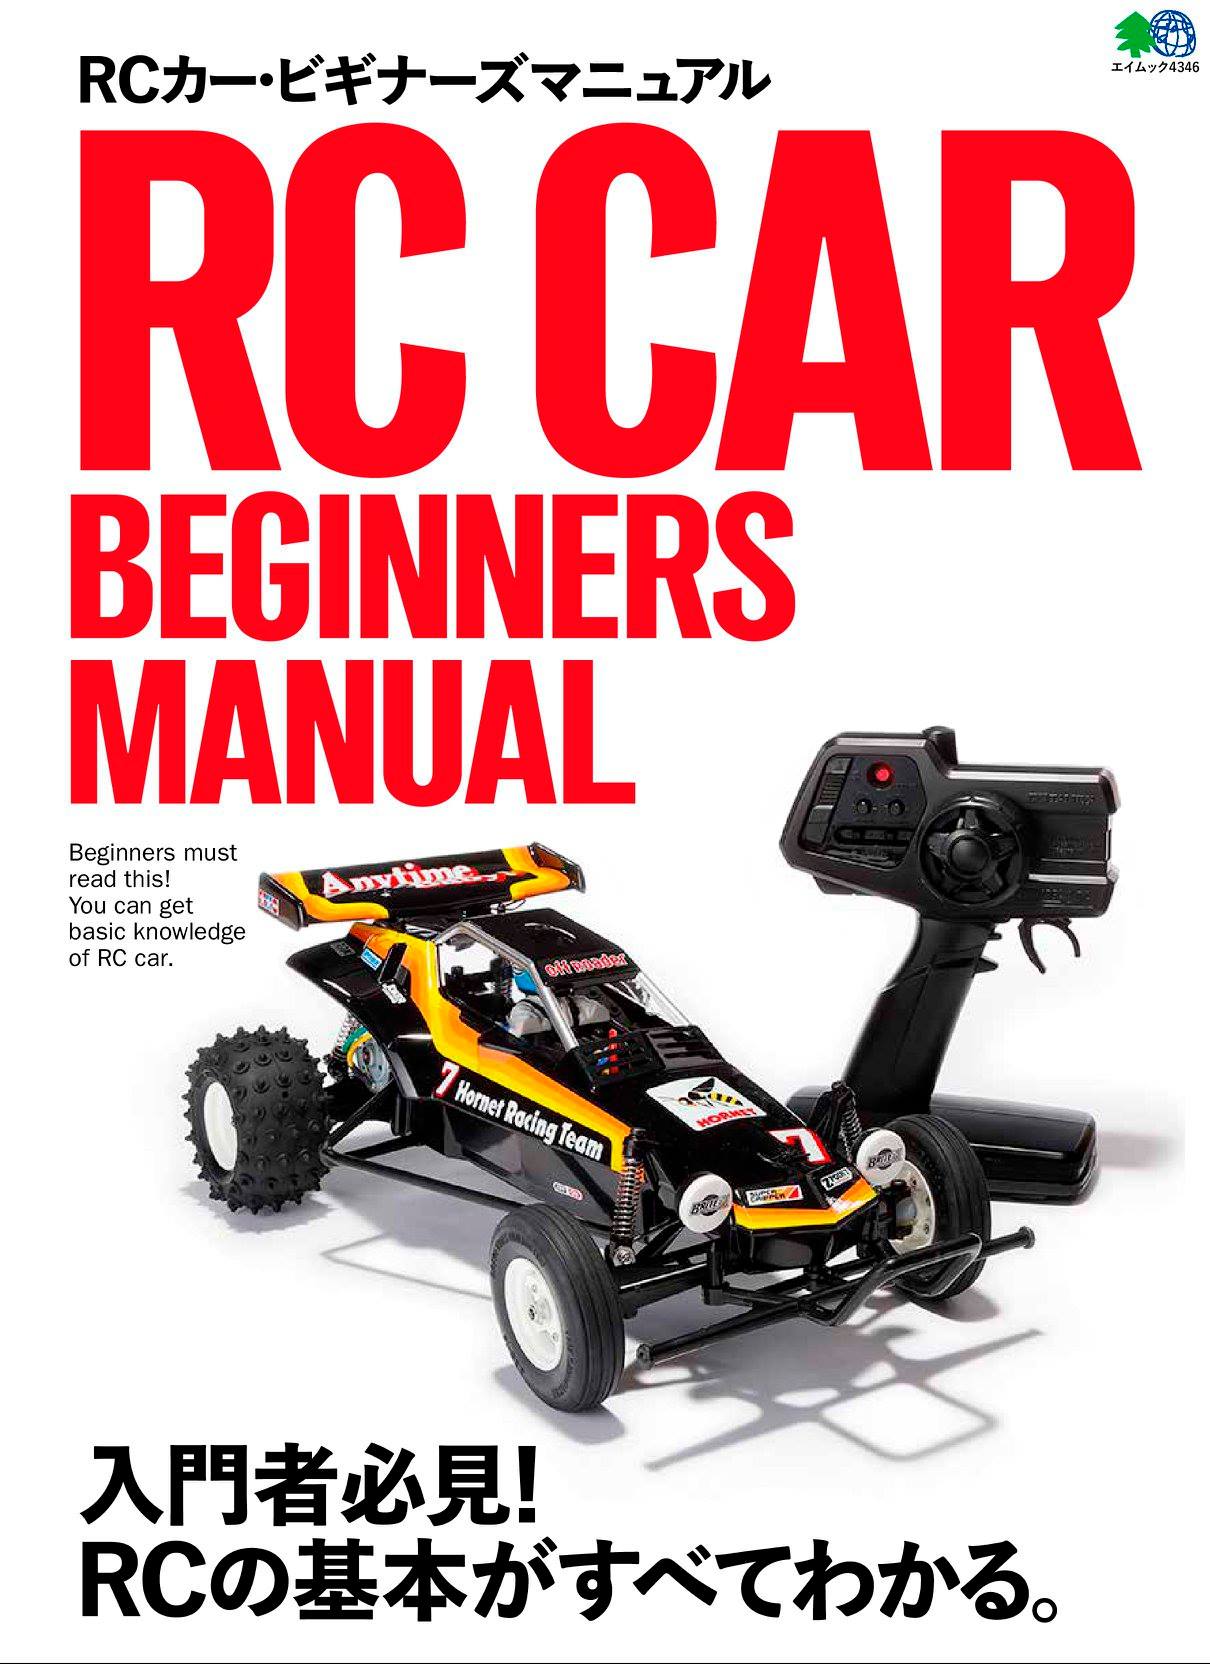 RC car beginners manual by RC World Magazine TamiyaBlog